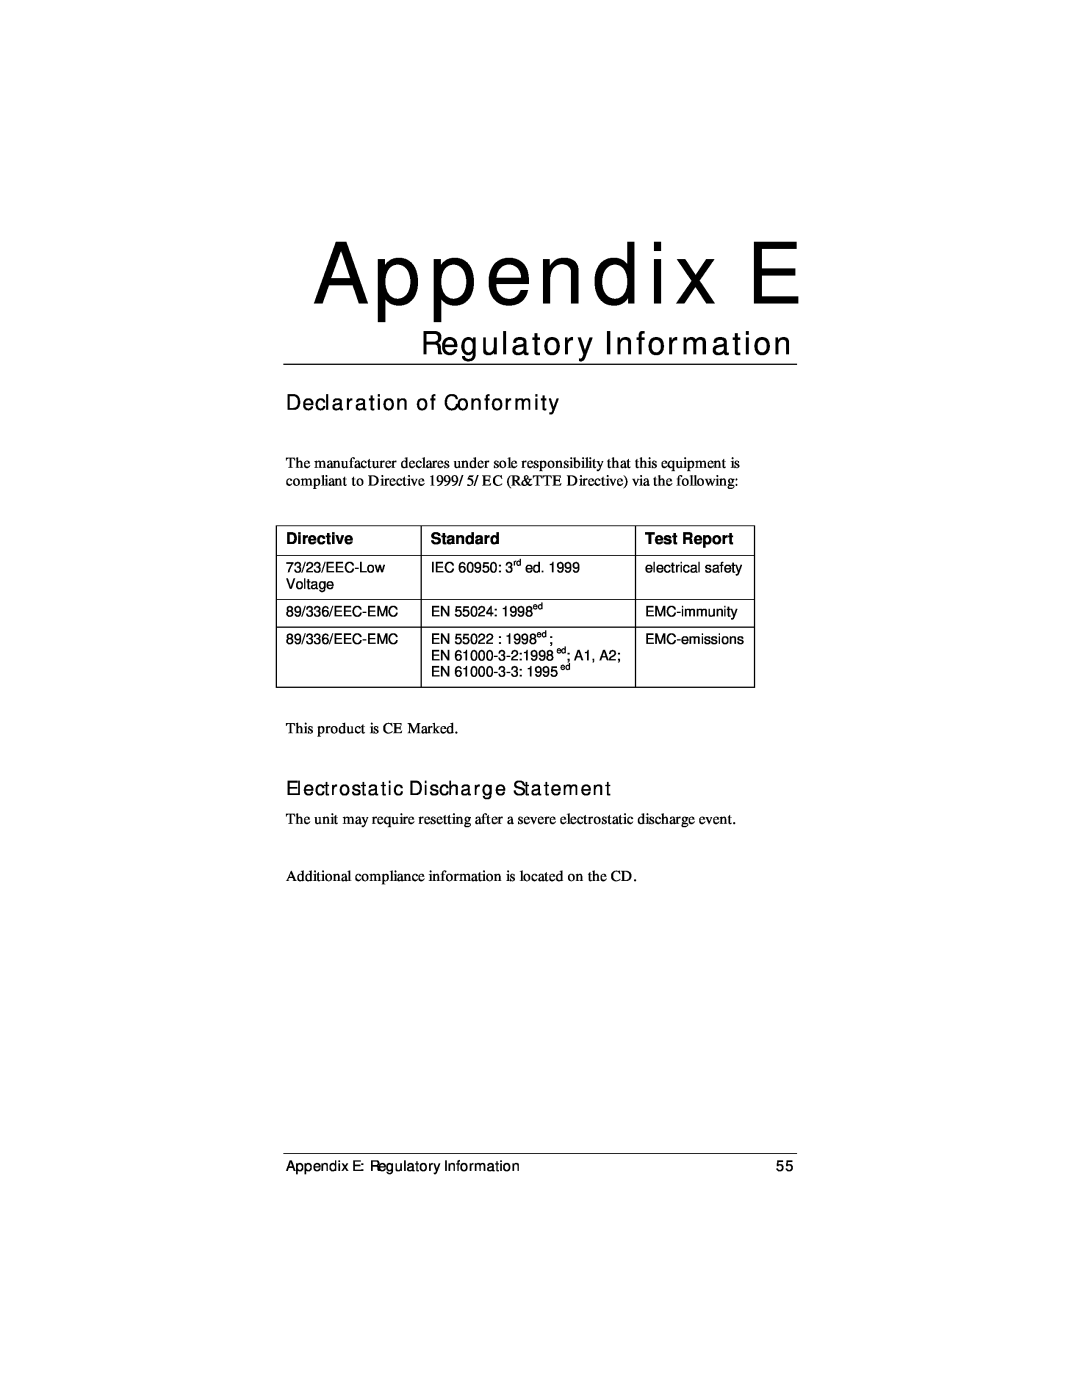 Zoom X4 manual Appendix E, Regulatory Information, Declaration of Conformity, Electrostatic Discharge Statement, Directive 